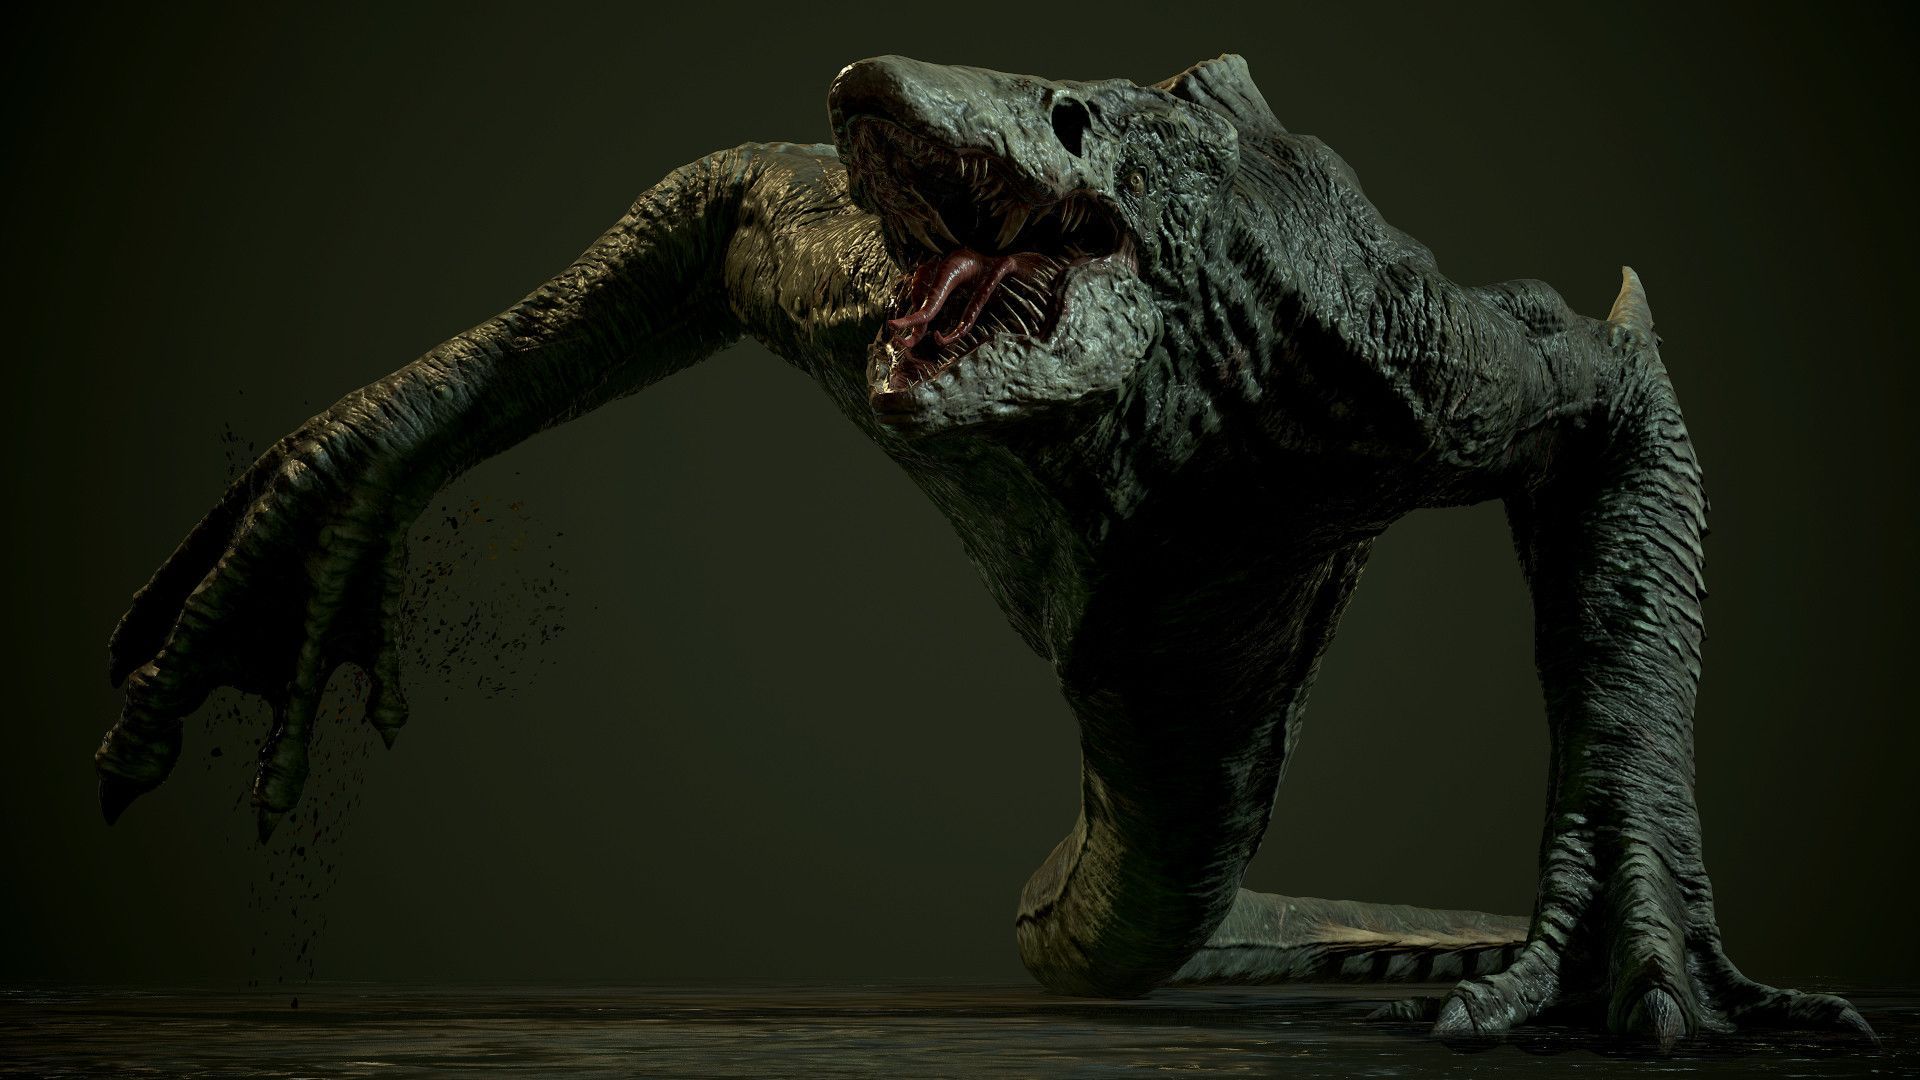 Skullcrawler, uses its prehensile tongue to eat its prey. Monster artwork, King kong skull island, Kaiju monsters